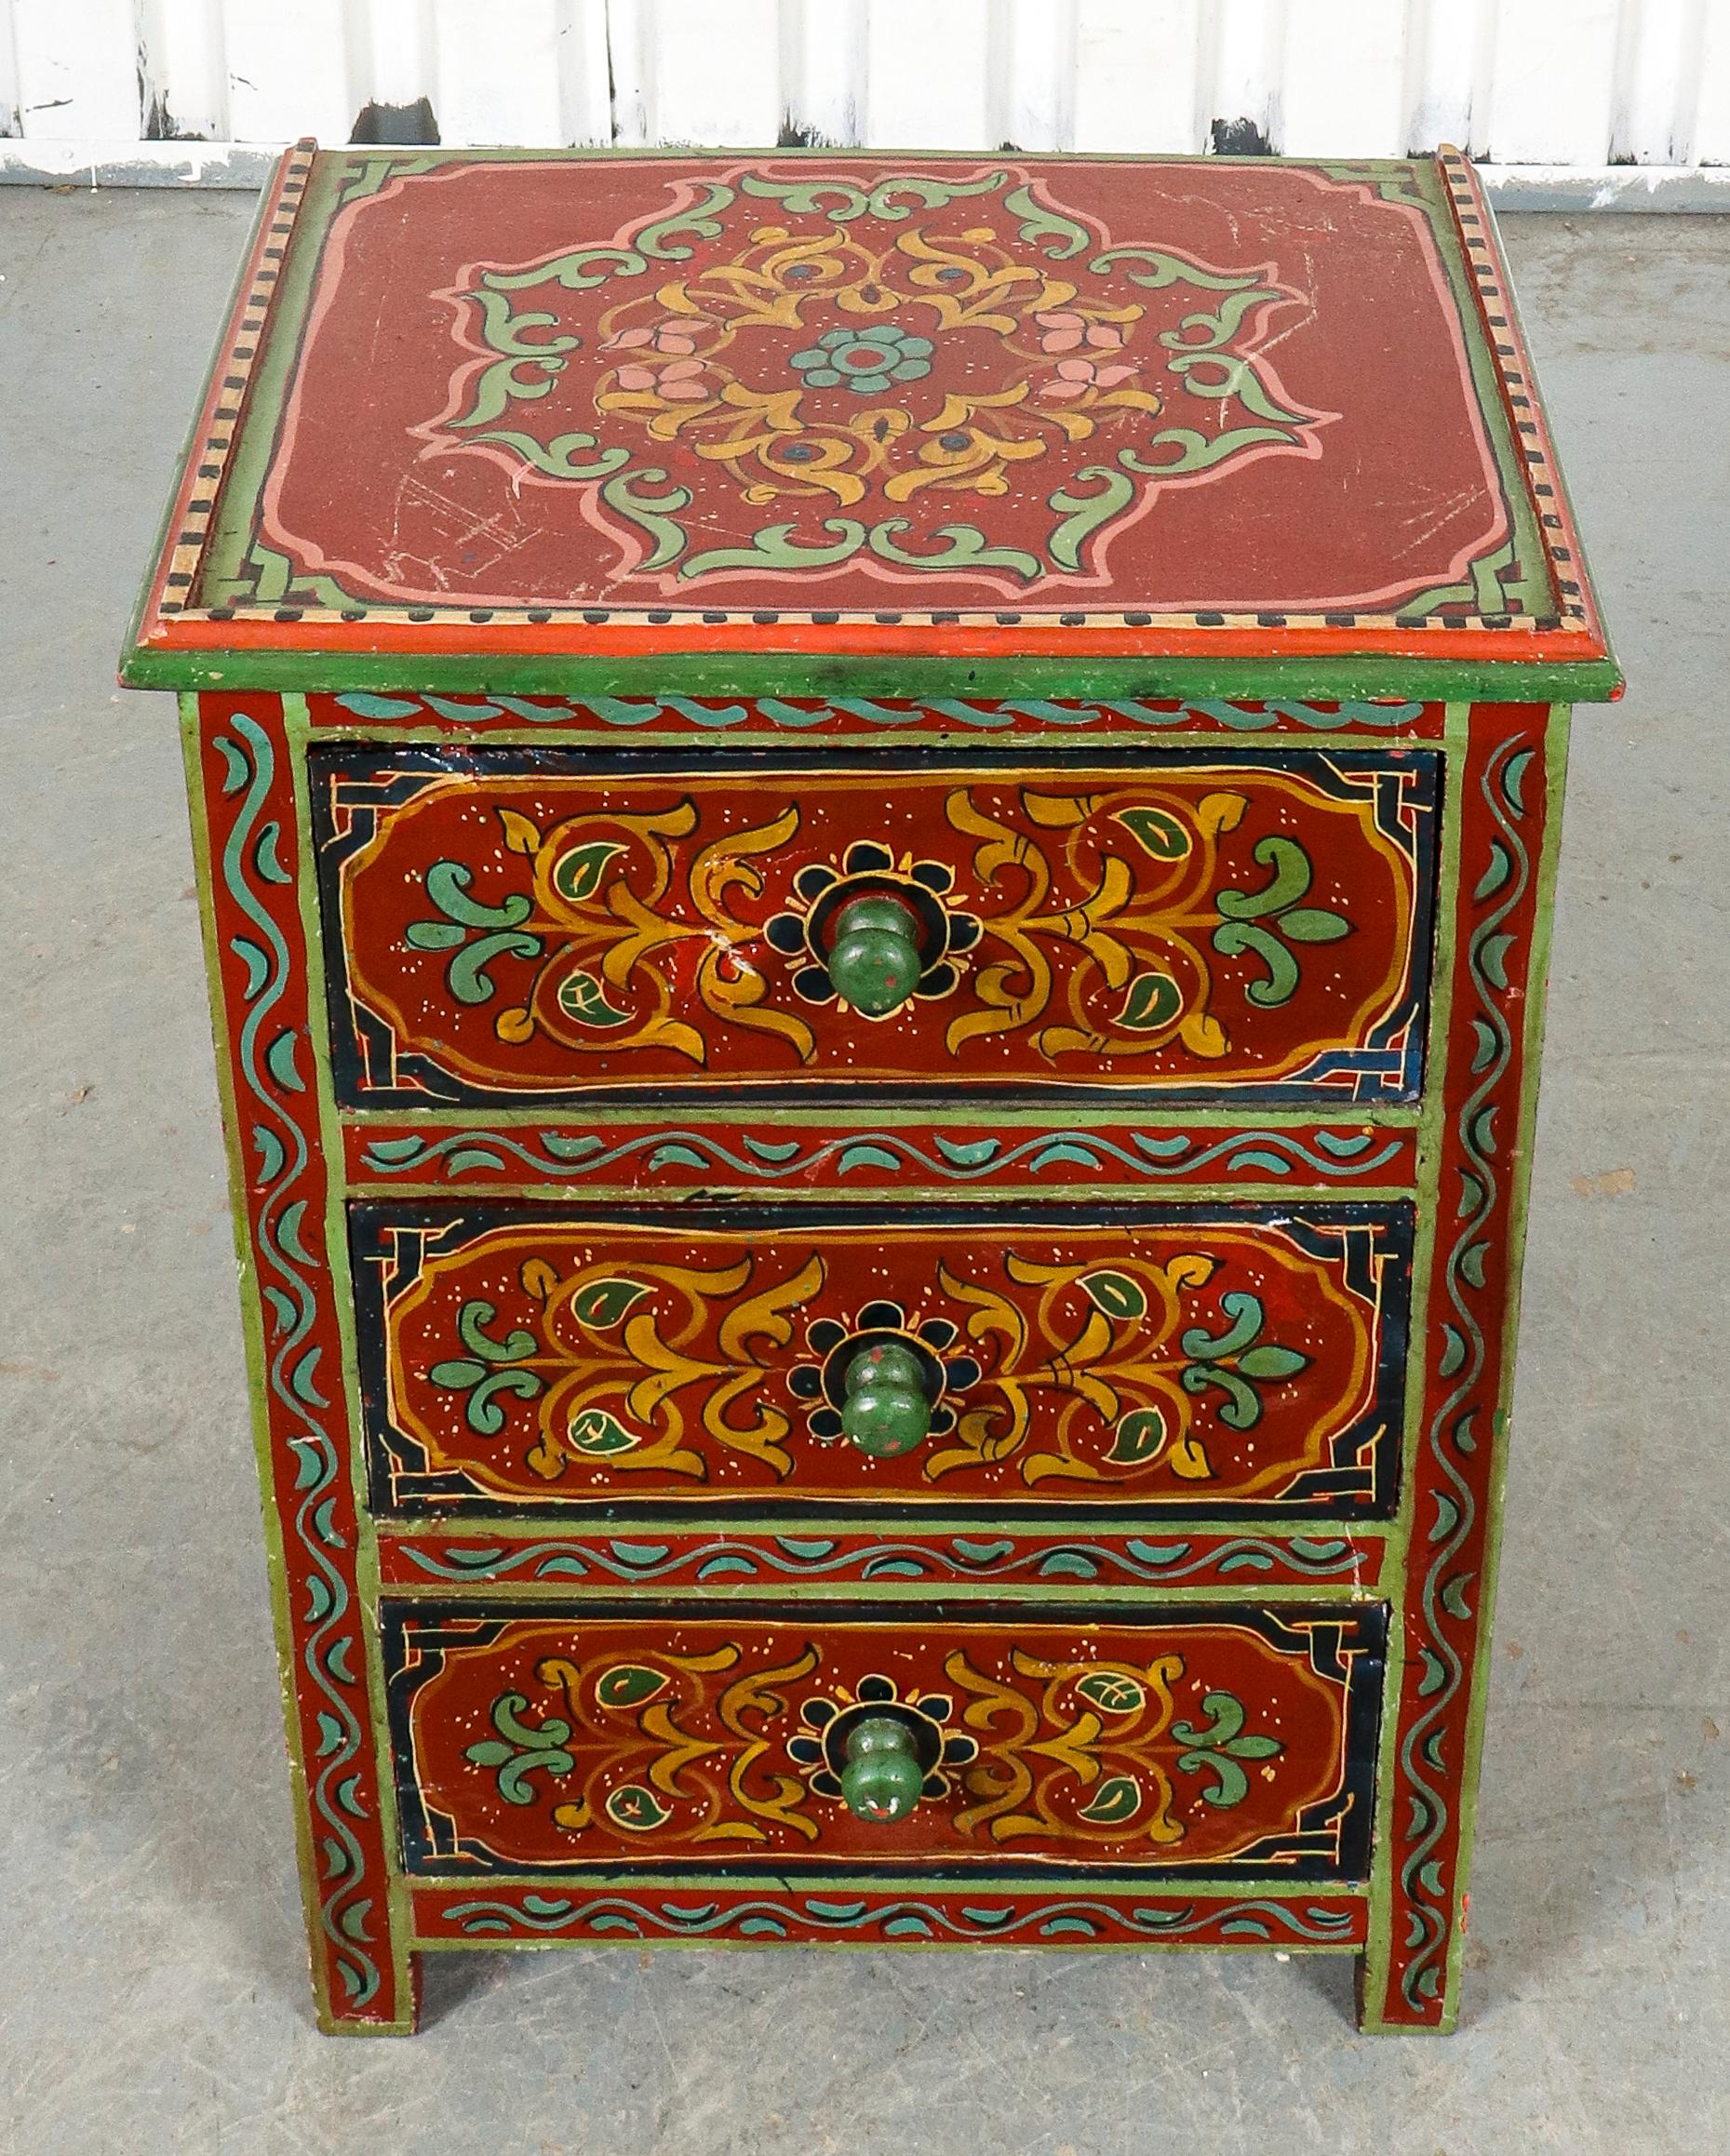 Tibetisch bemalte Kommode, drei Schubladen, mit mehrfarbigen Ornamenten verziert. 
Maße: 26.25